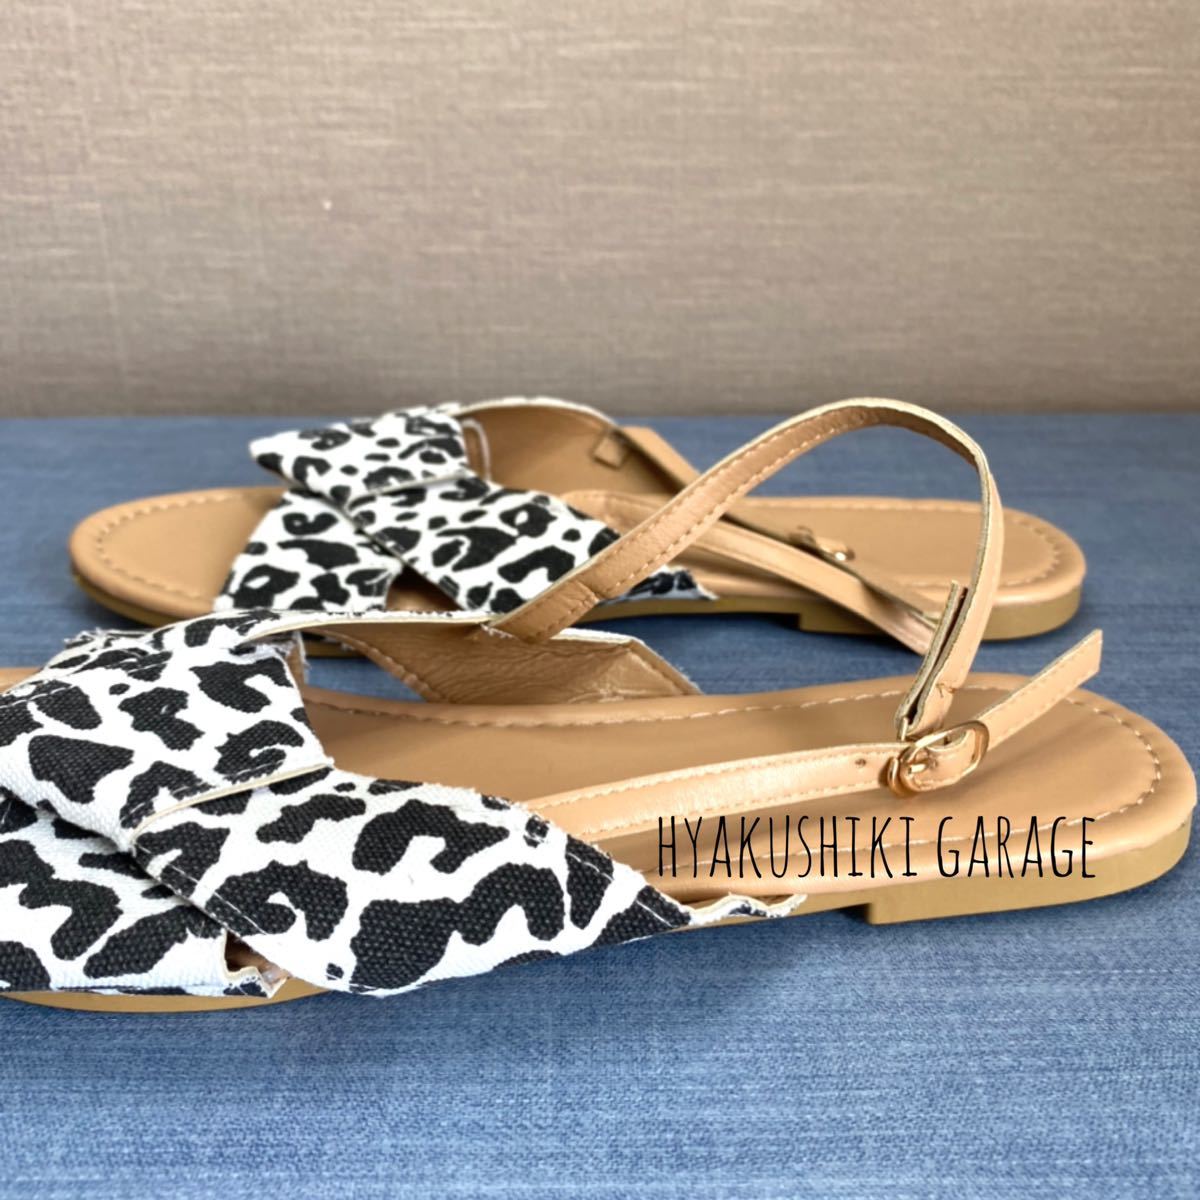  large size 26cm white leopard print sandals B25-11 lady's pretty 